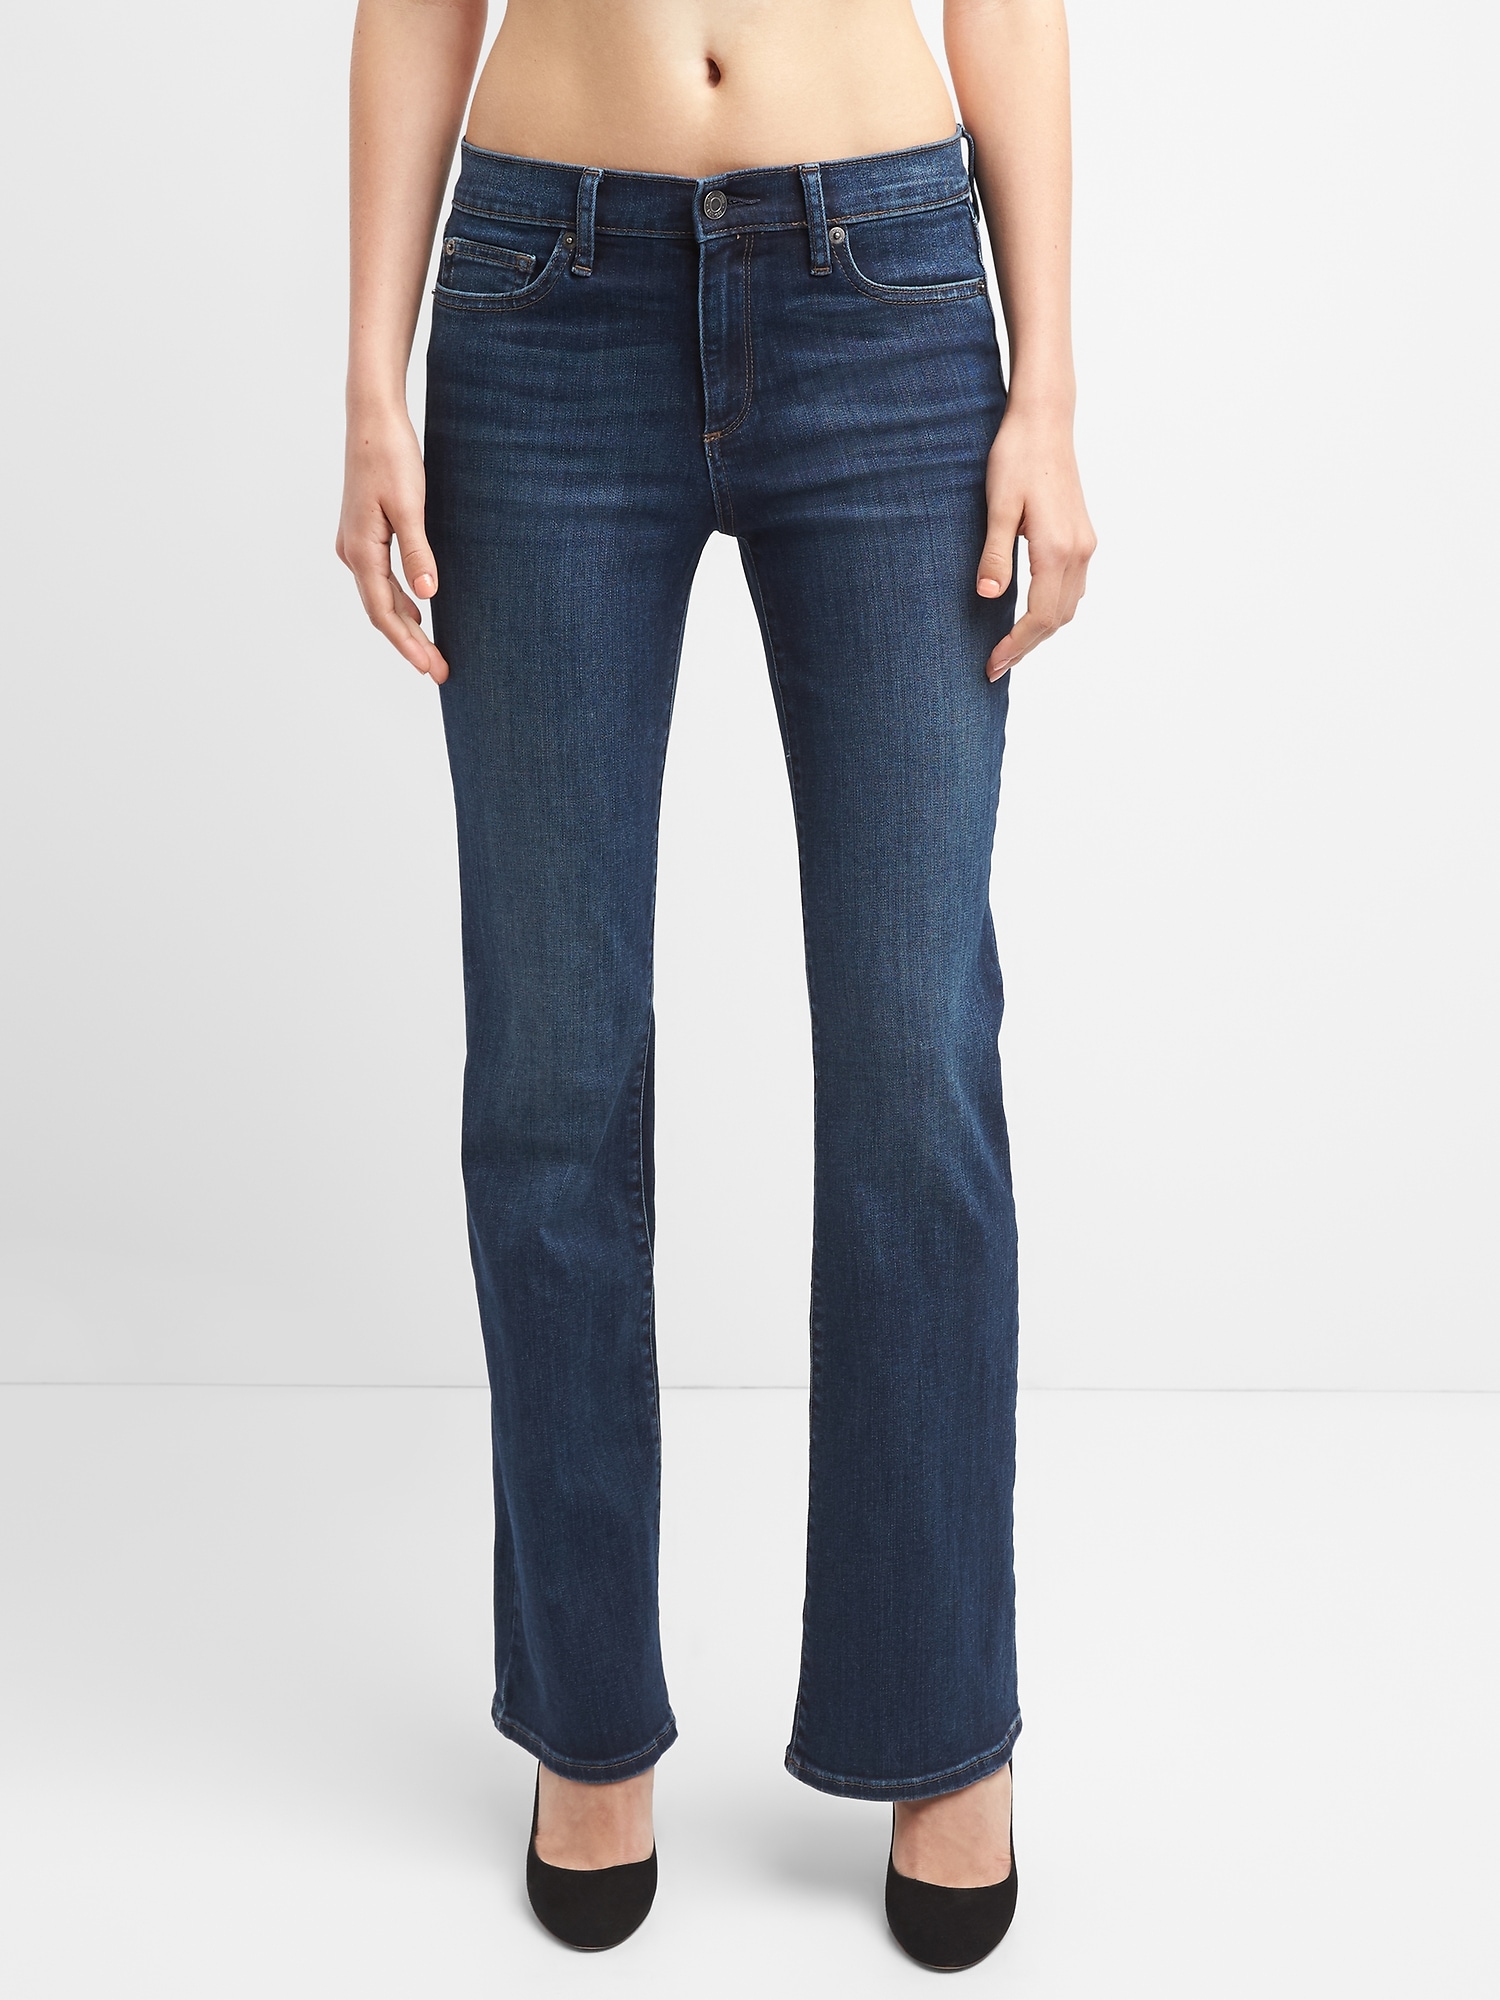 gap curvy low rise bootcut jeans